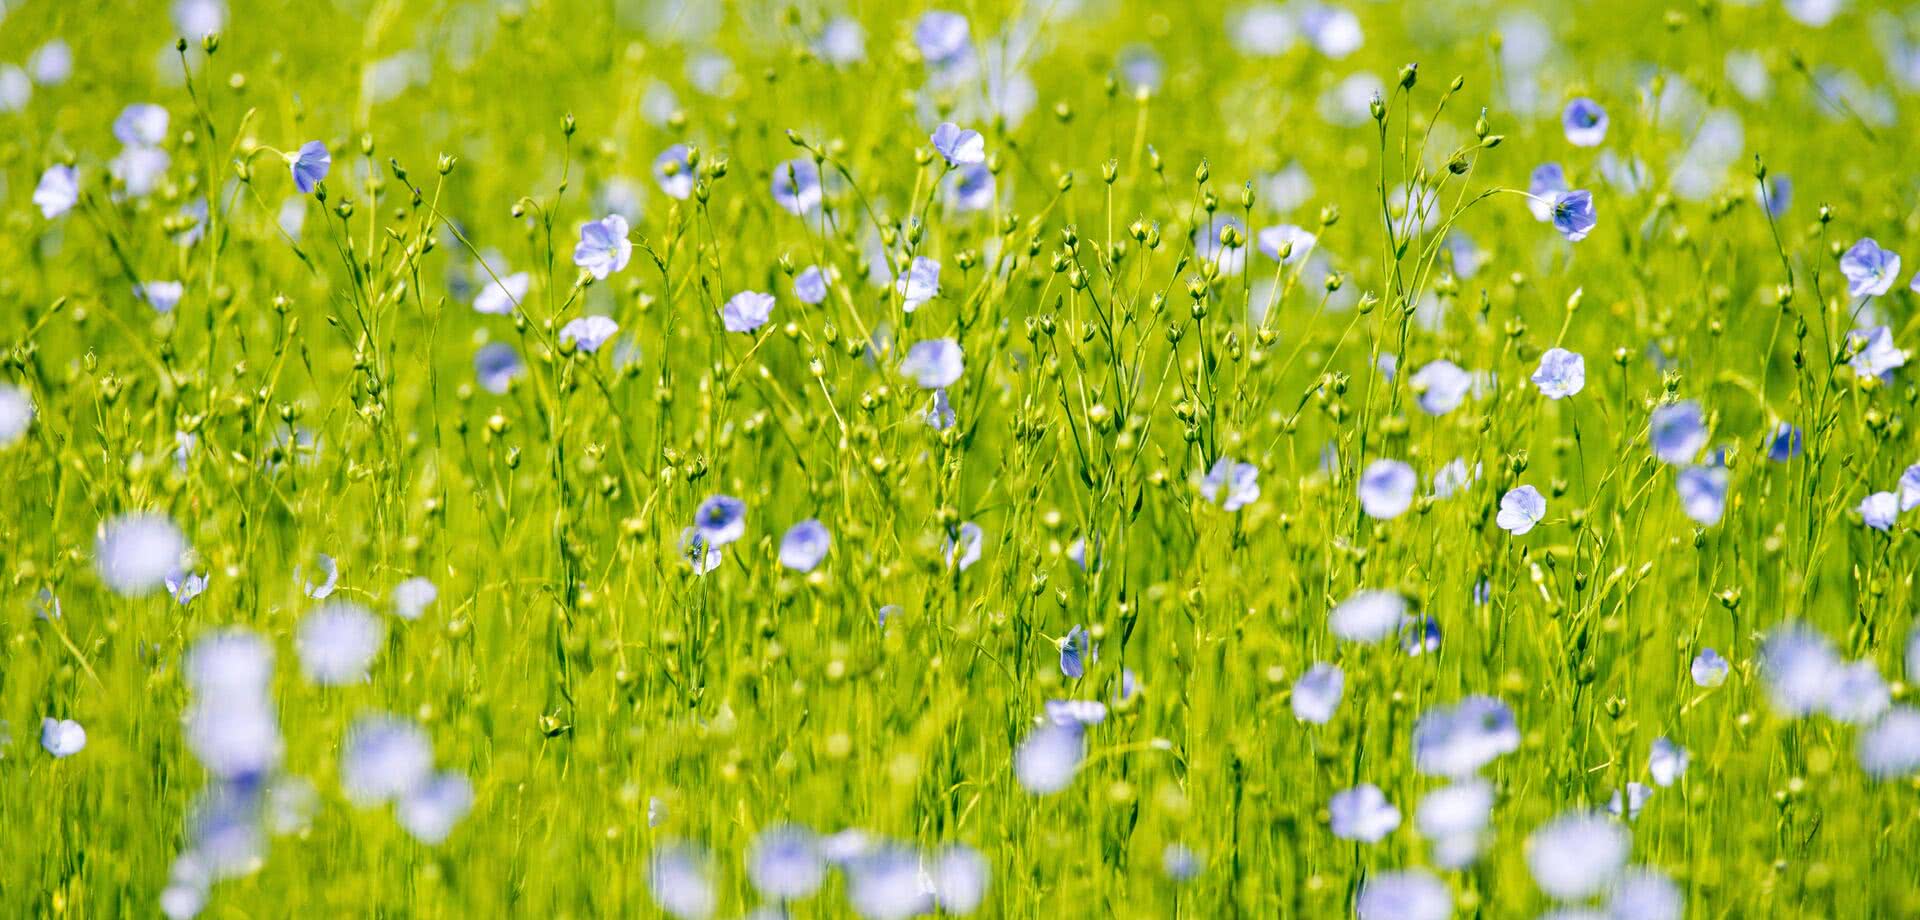 flax flower fields